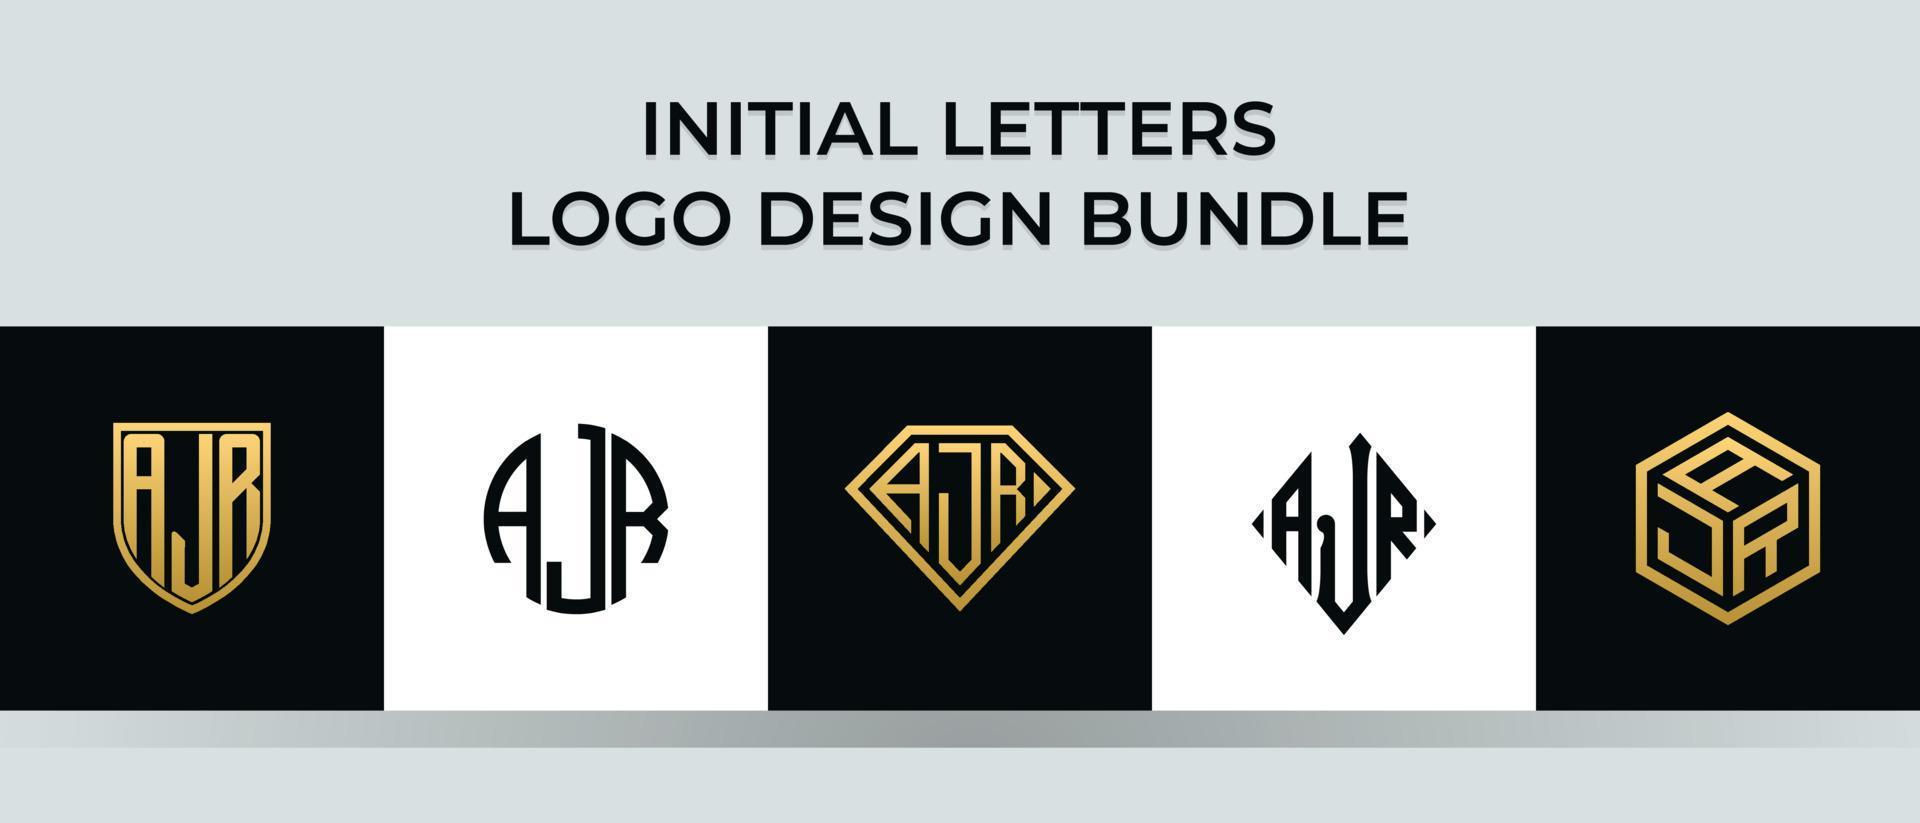 Initial letters AJR logo designs Bundle vector